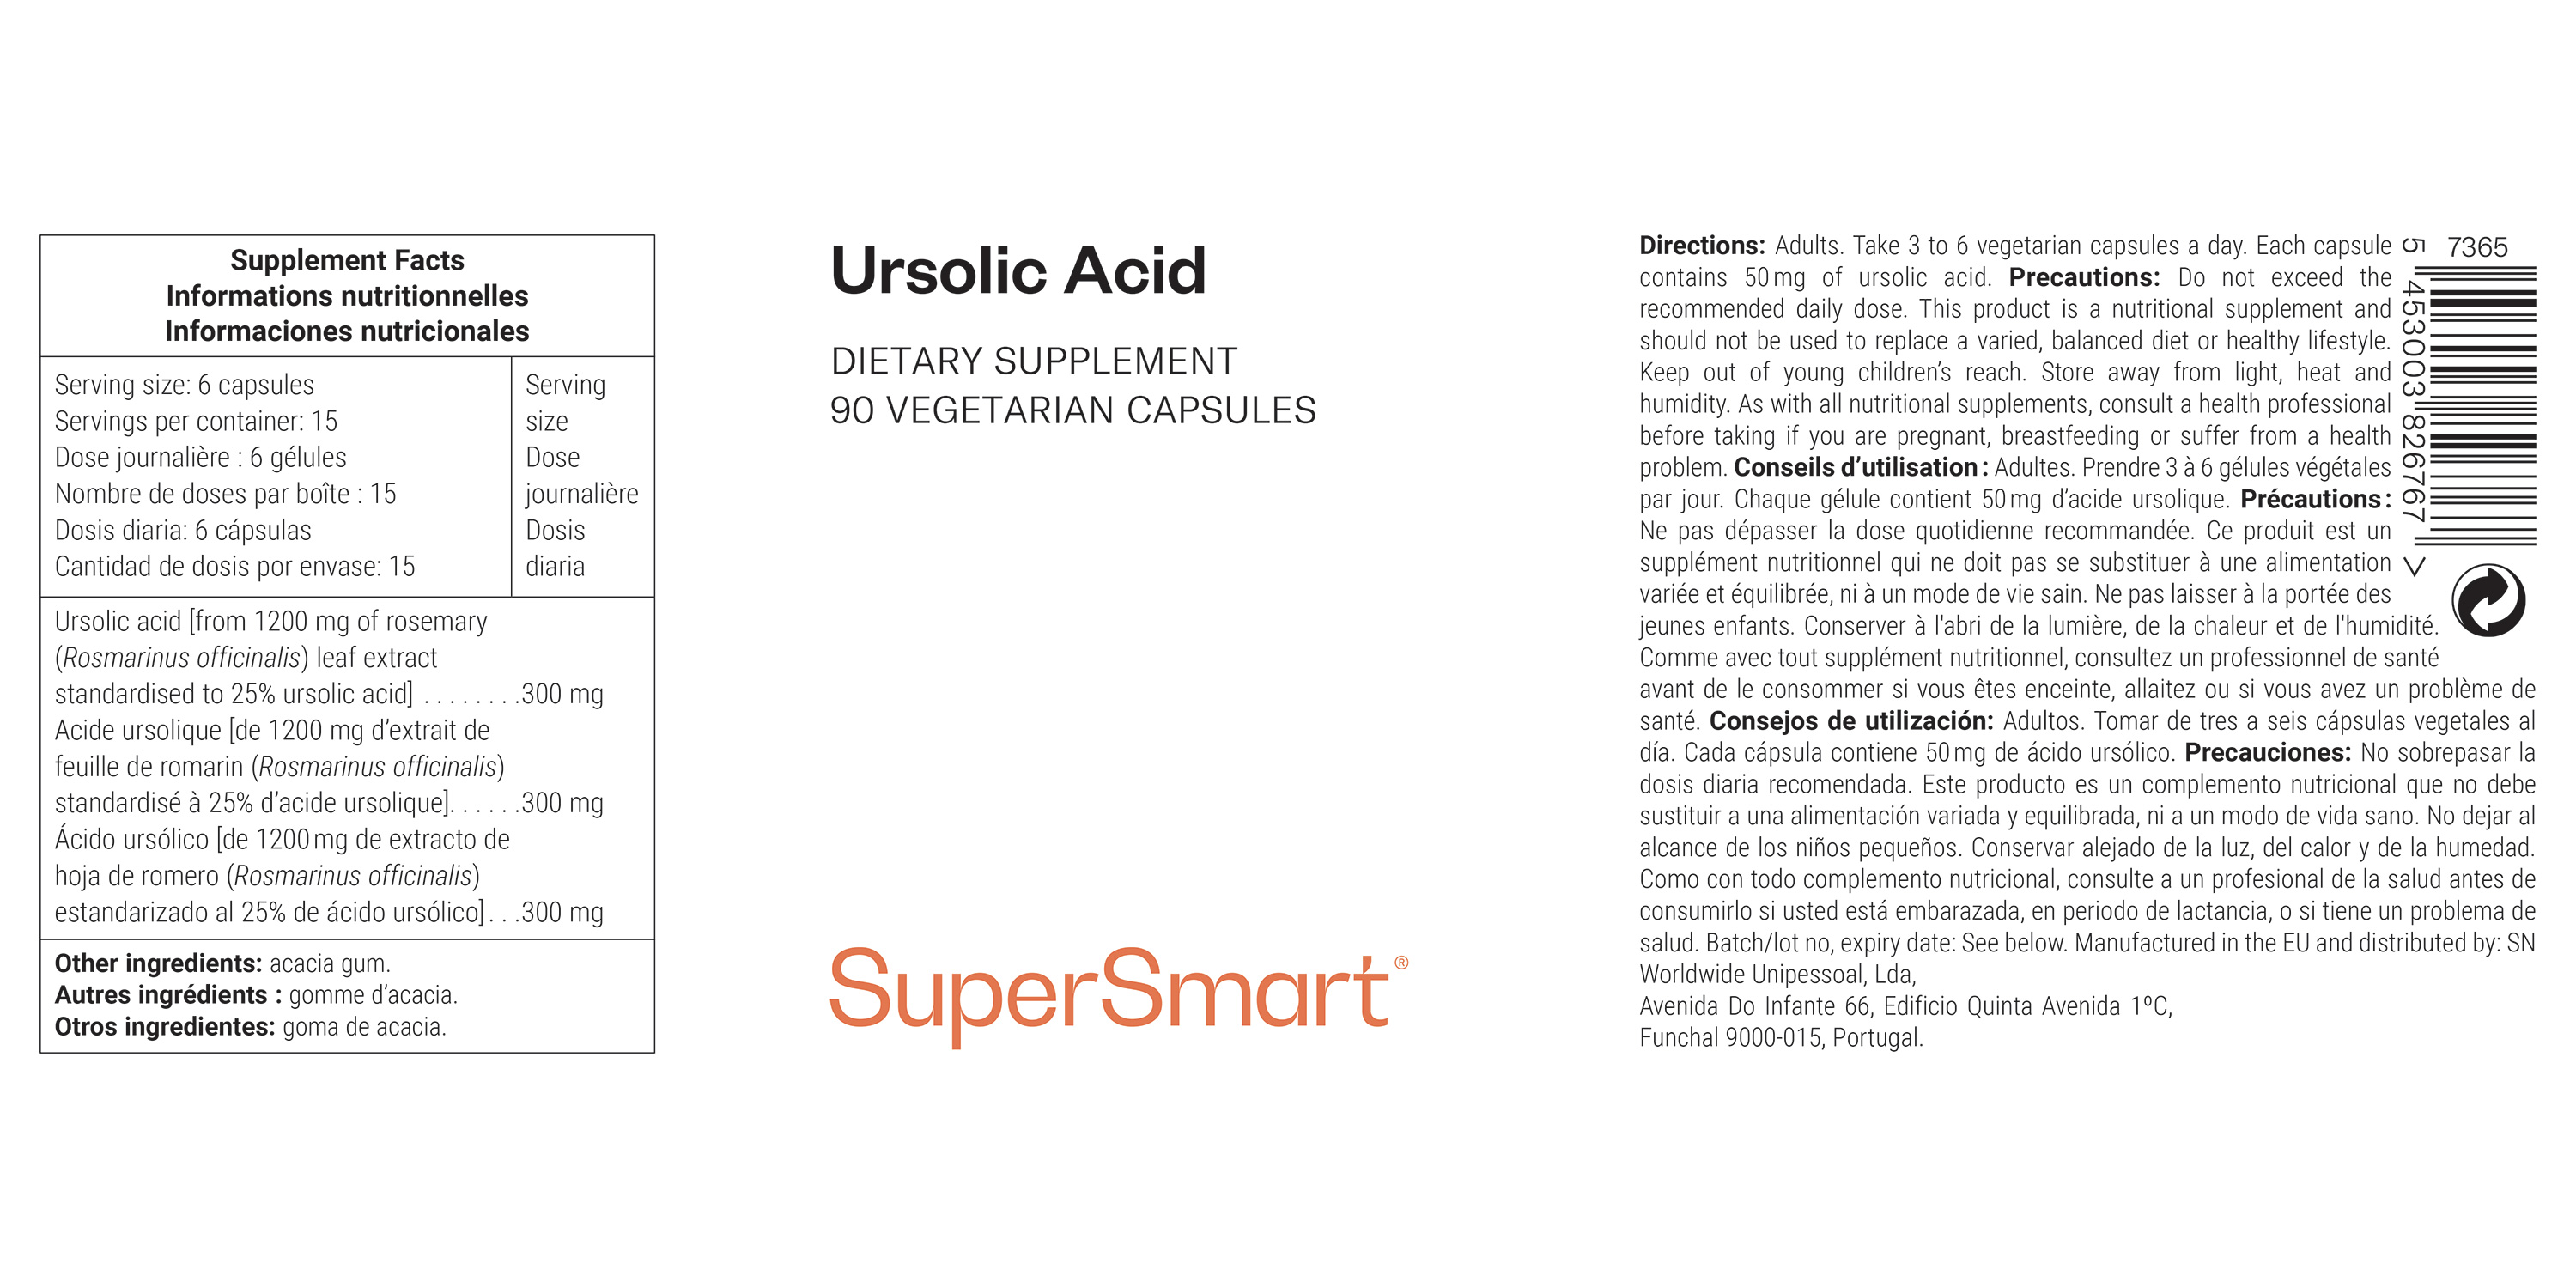 Dietary supplement of ursolic acid